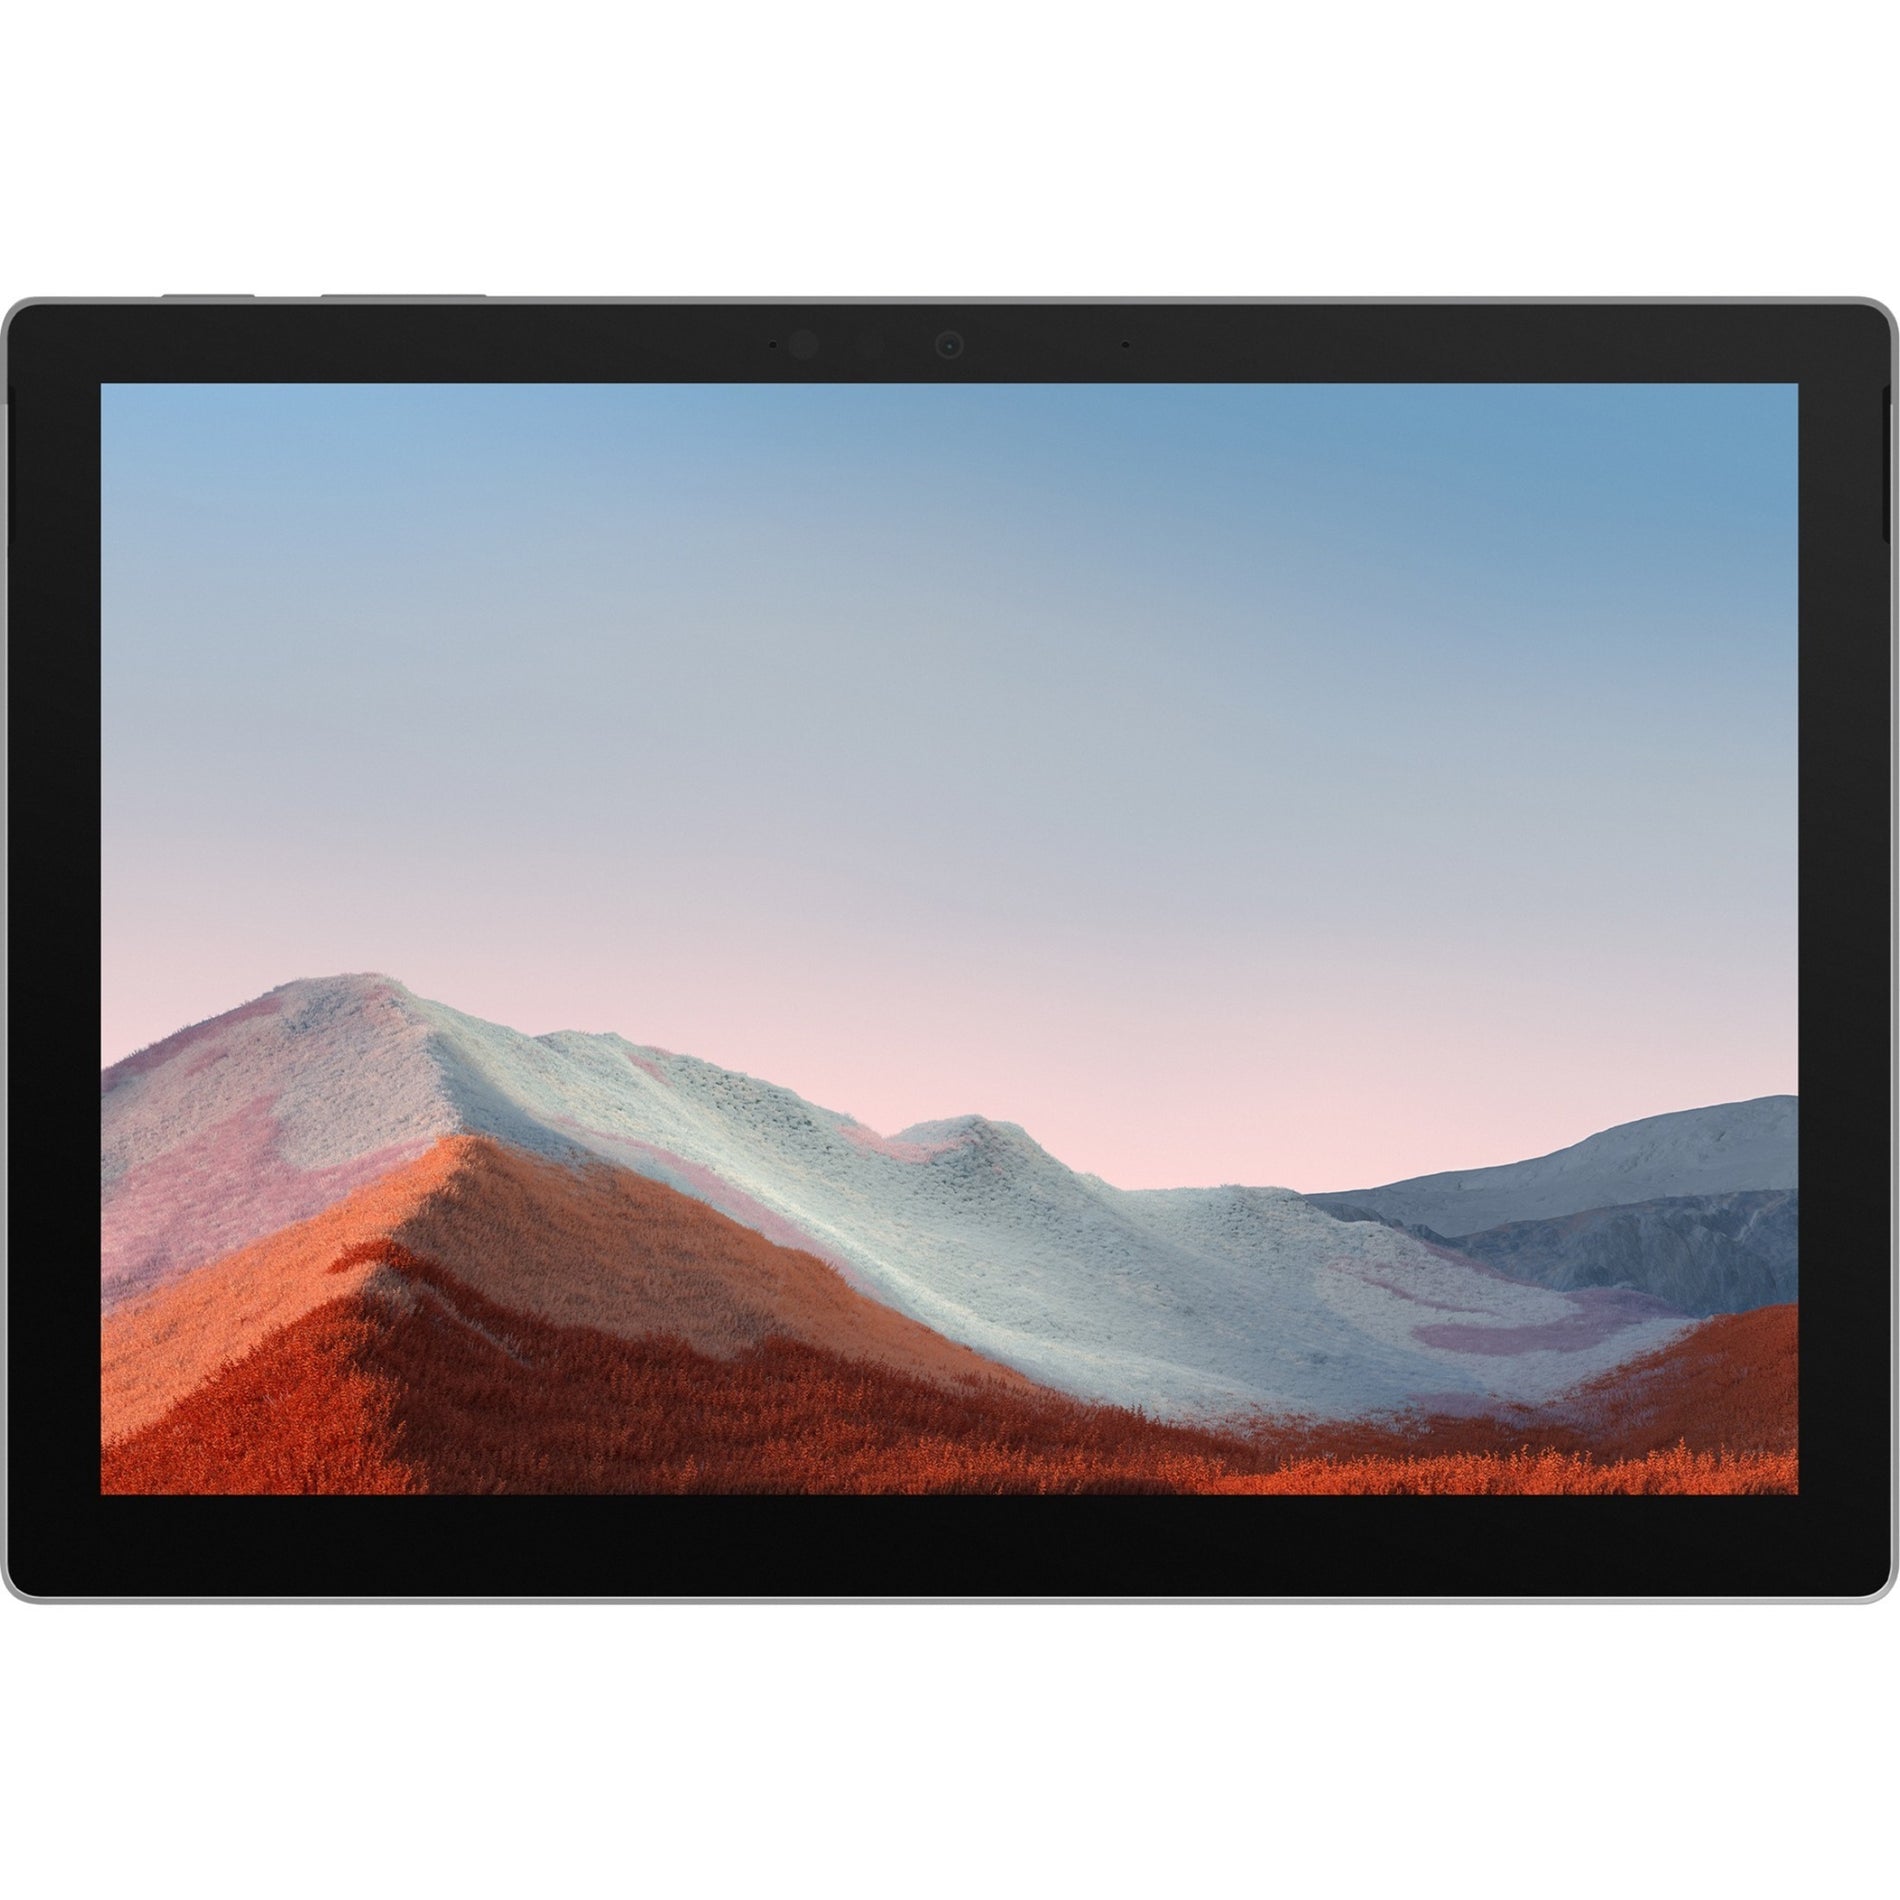 Microsoft 1YY-00001 Surface Pro 7+ Tablet, Platinum TAA Compliant